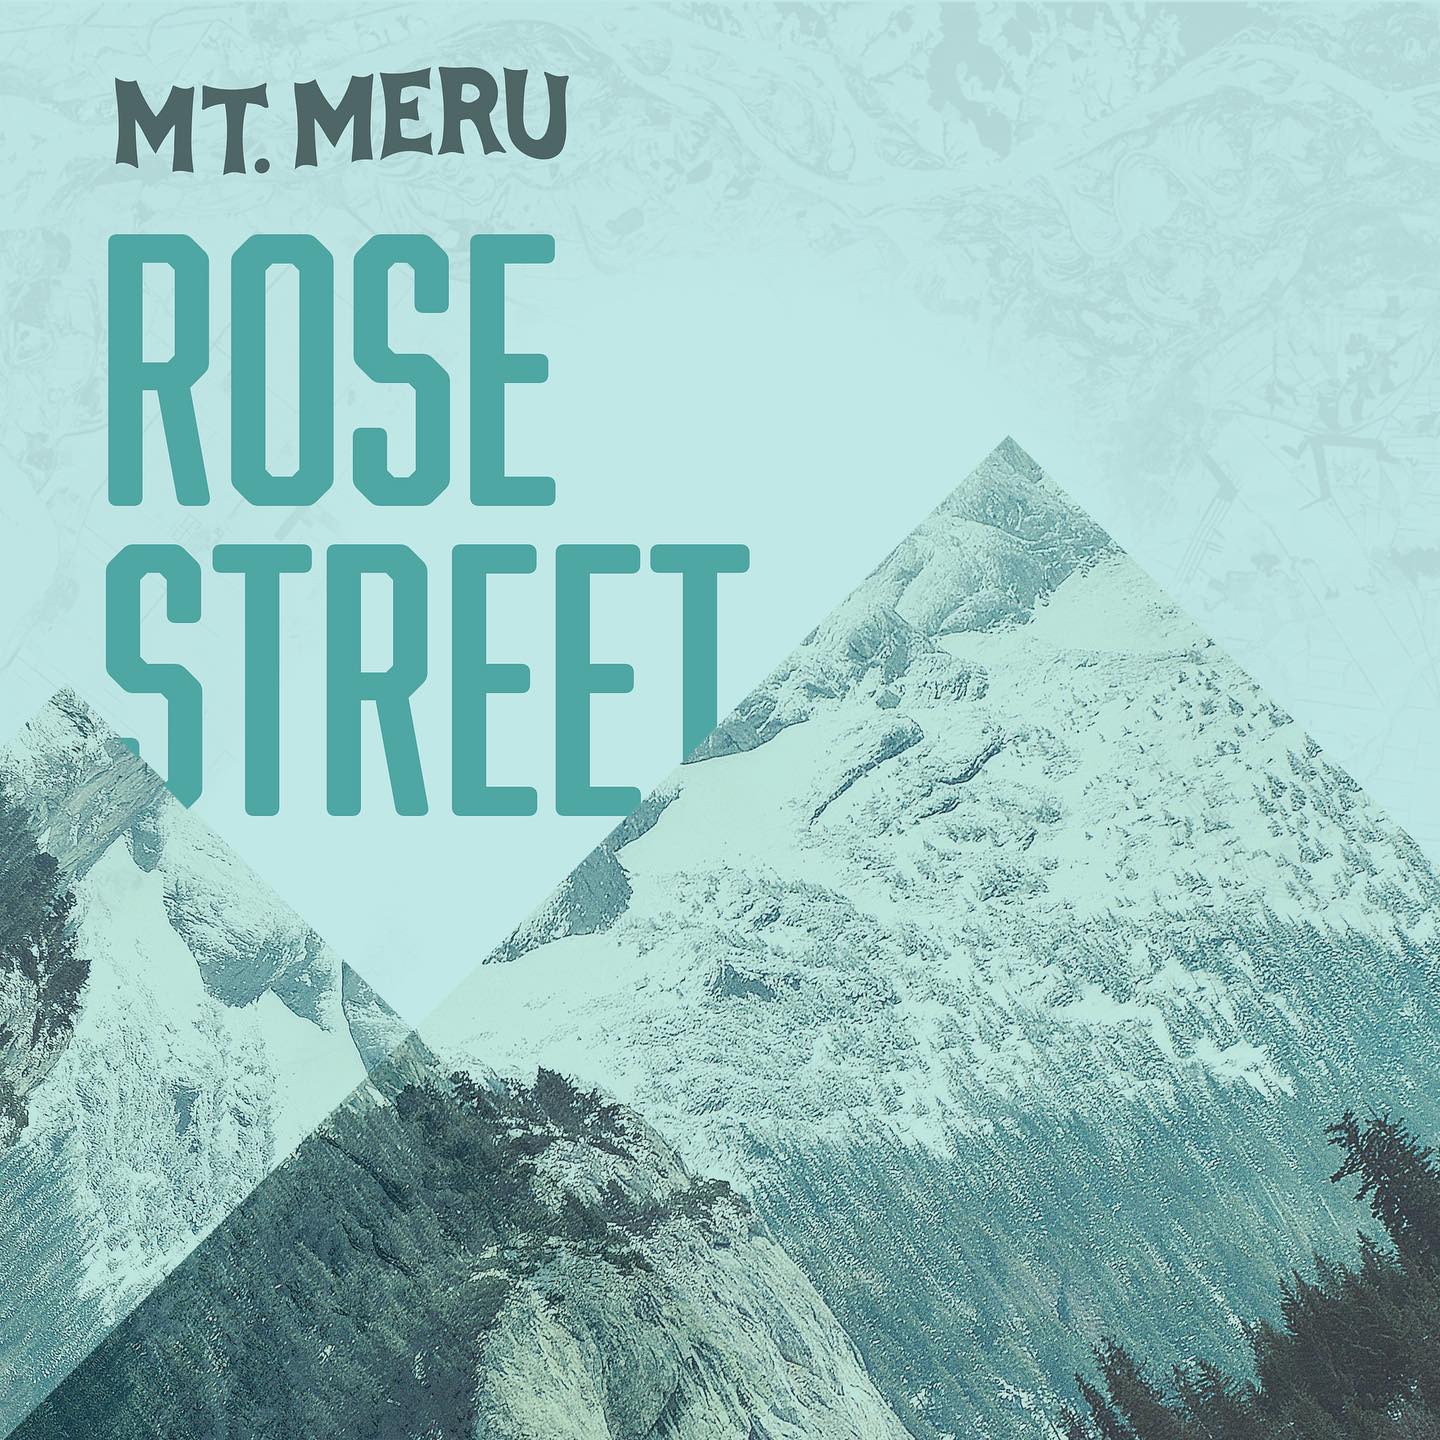 Mt. Meru – Rose Street